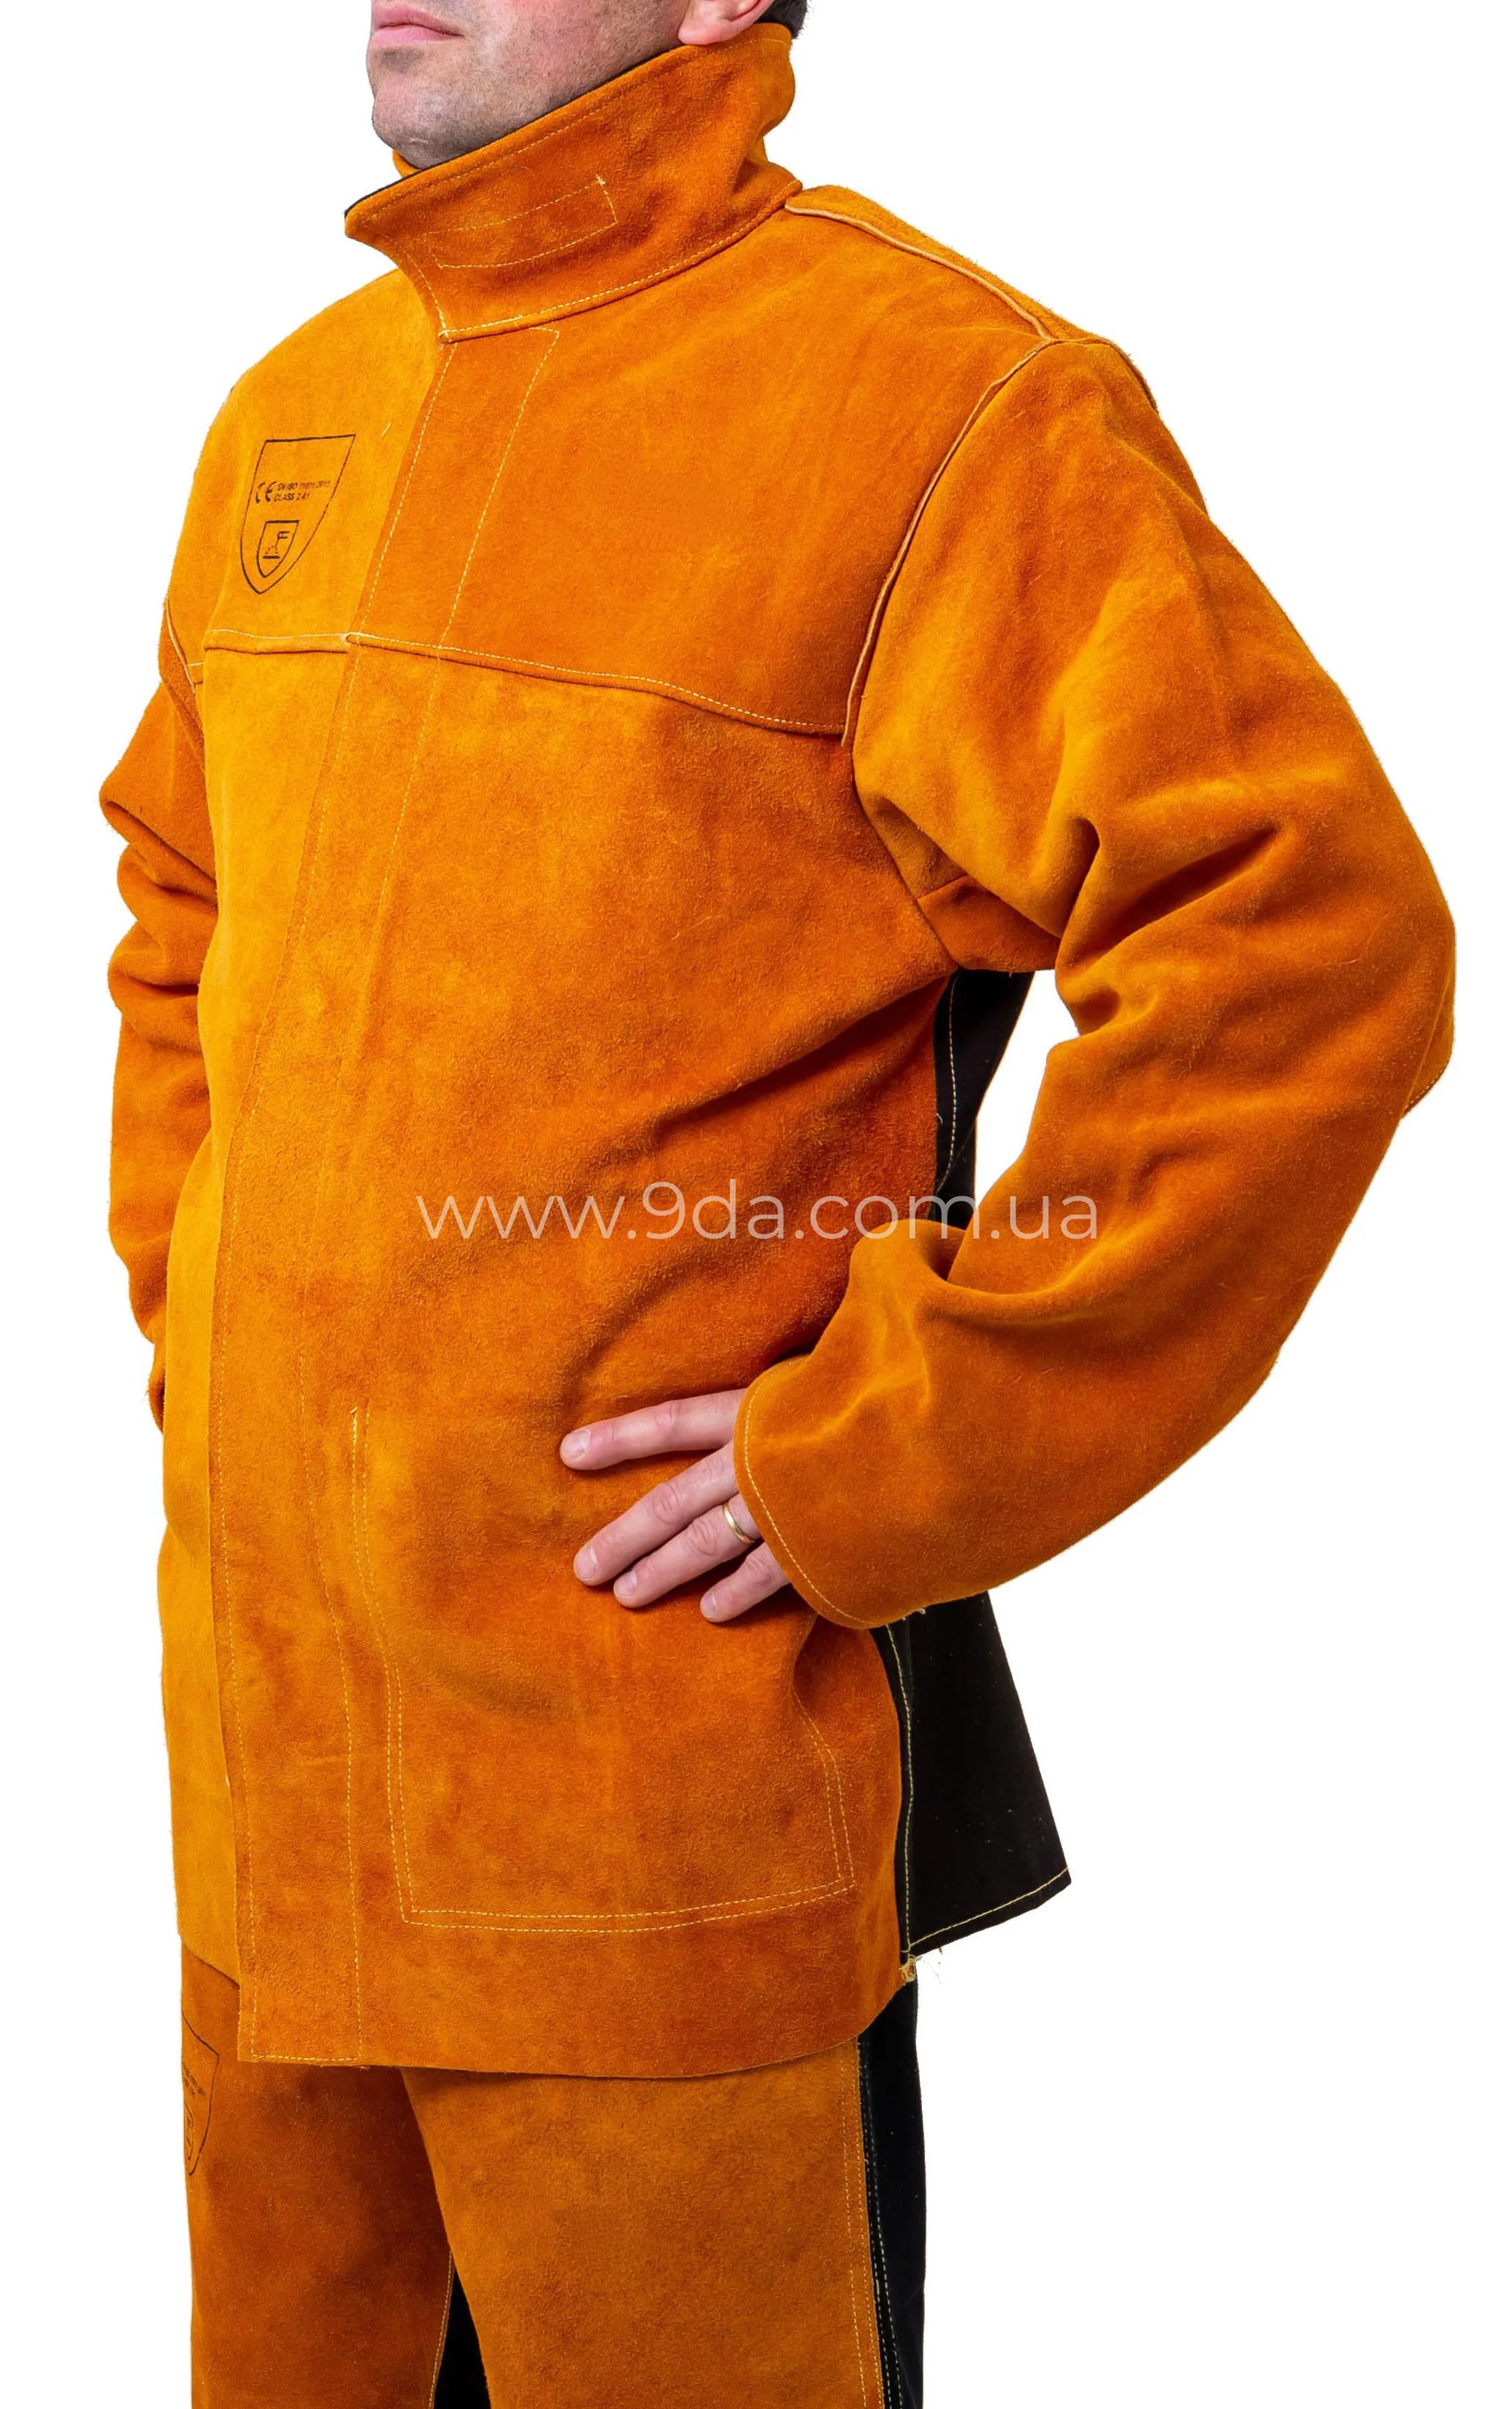 Куртка зварювальника, шкіряна, FR Front - Leather, Back Jacket Proban, size XL - 4